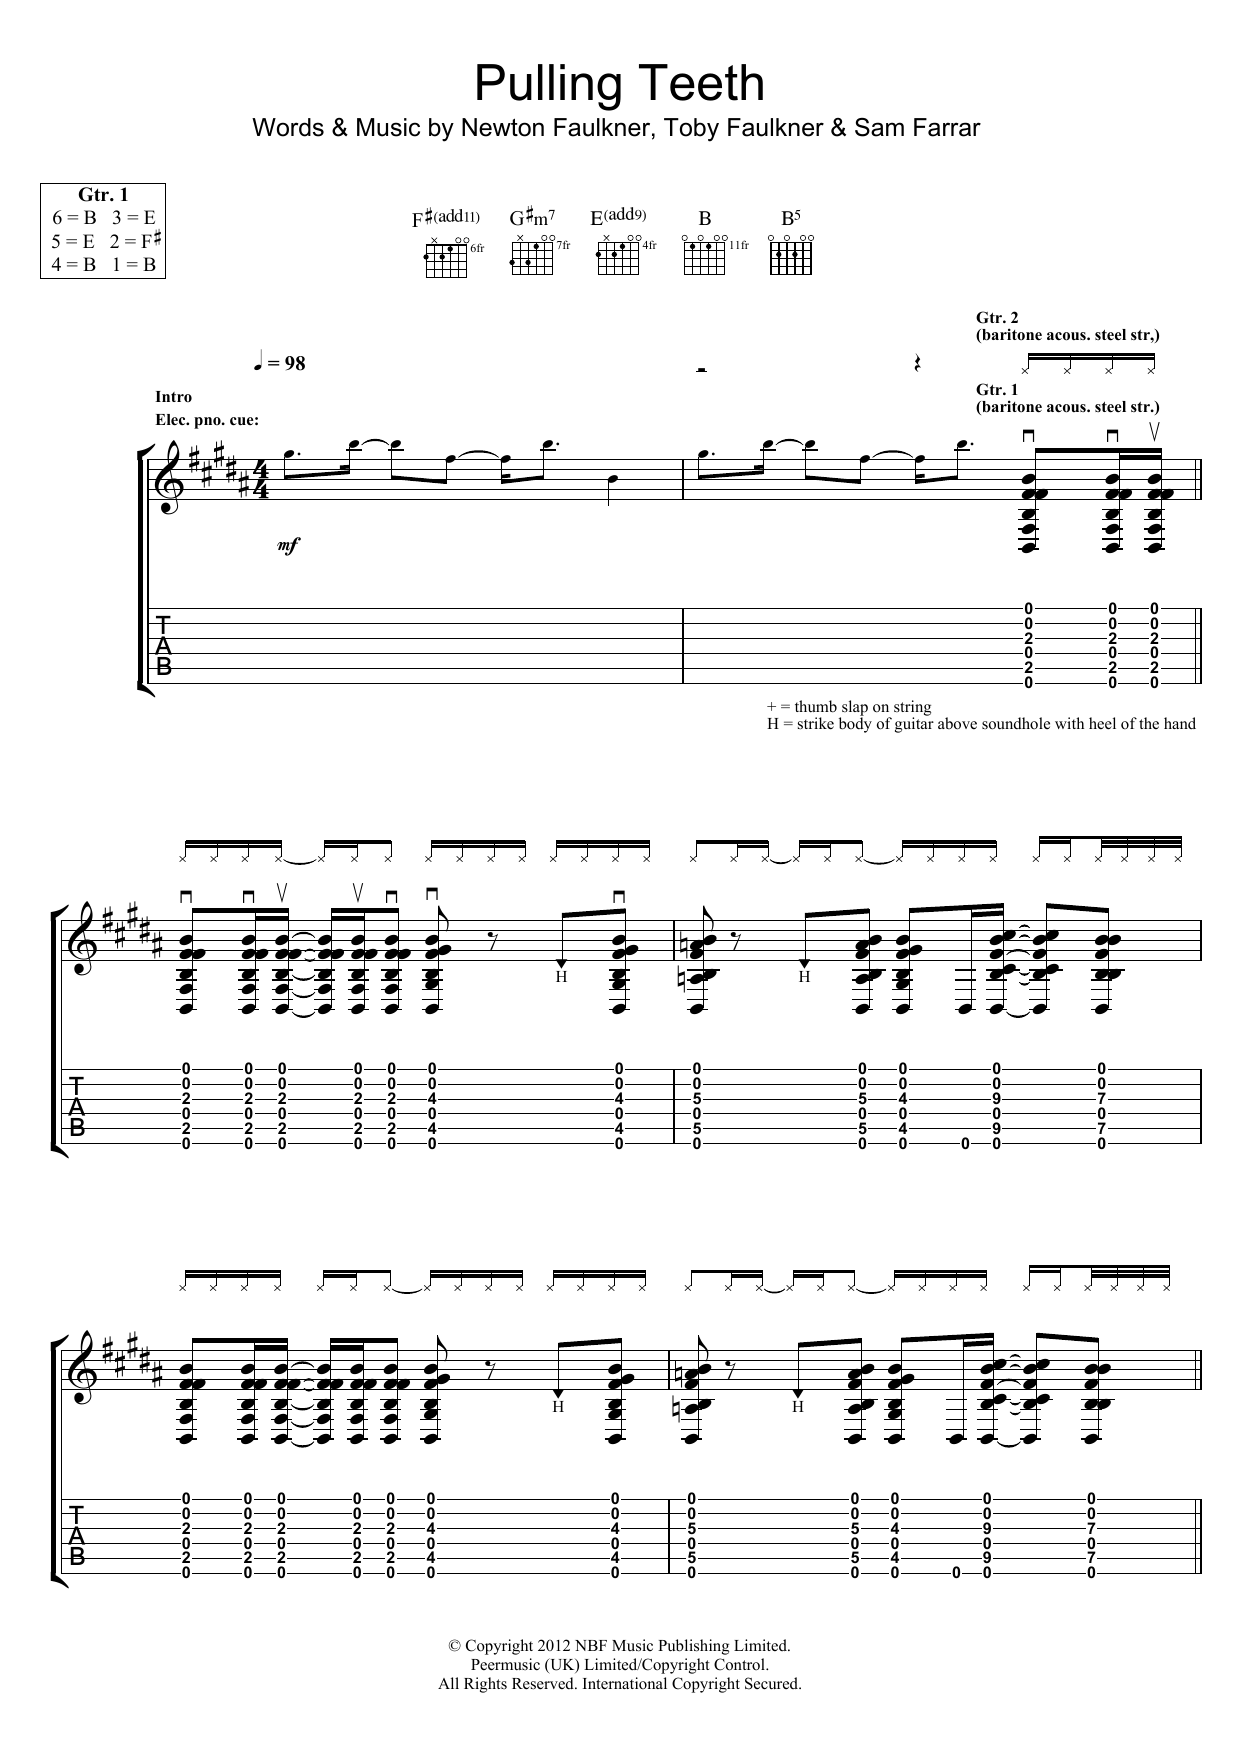 Newton Faulkner Pulling Teeth Sheet Music Notes & Chords for Guitar Tab - Download or Print PDF